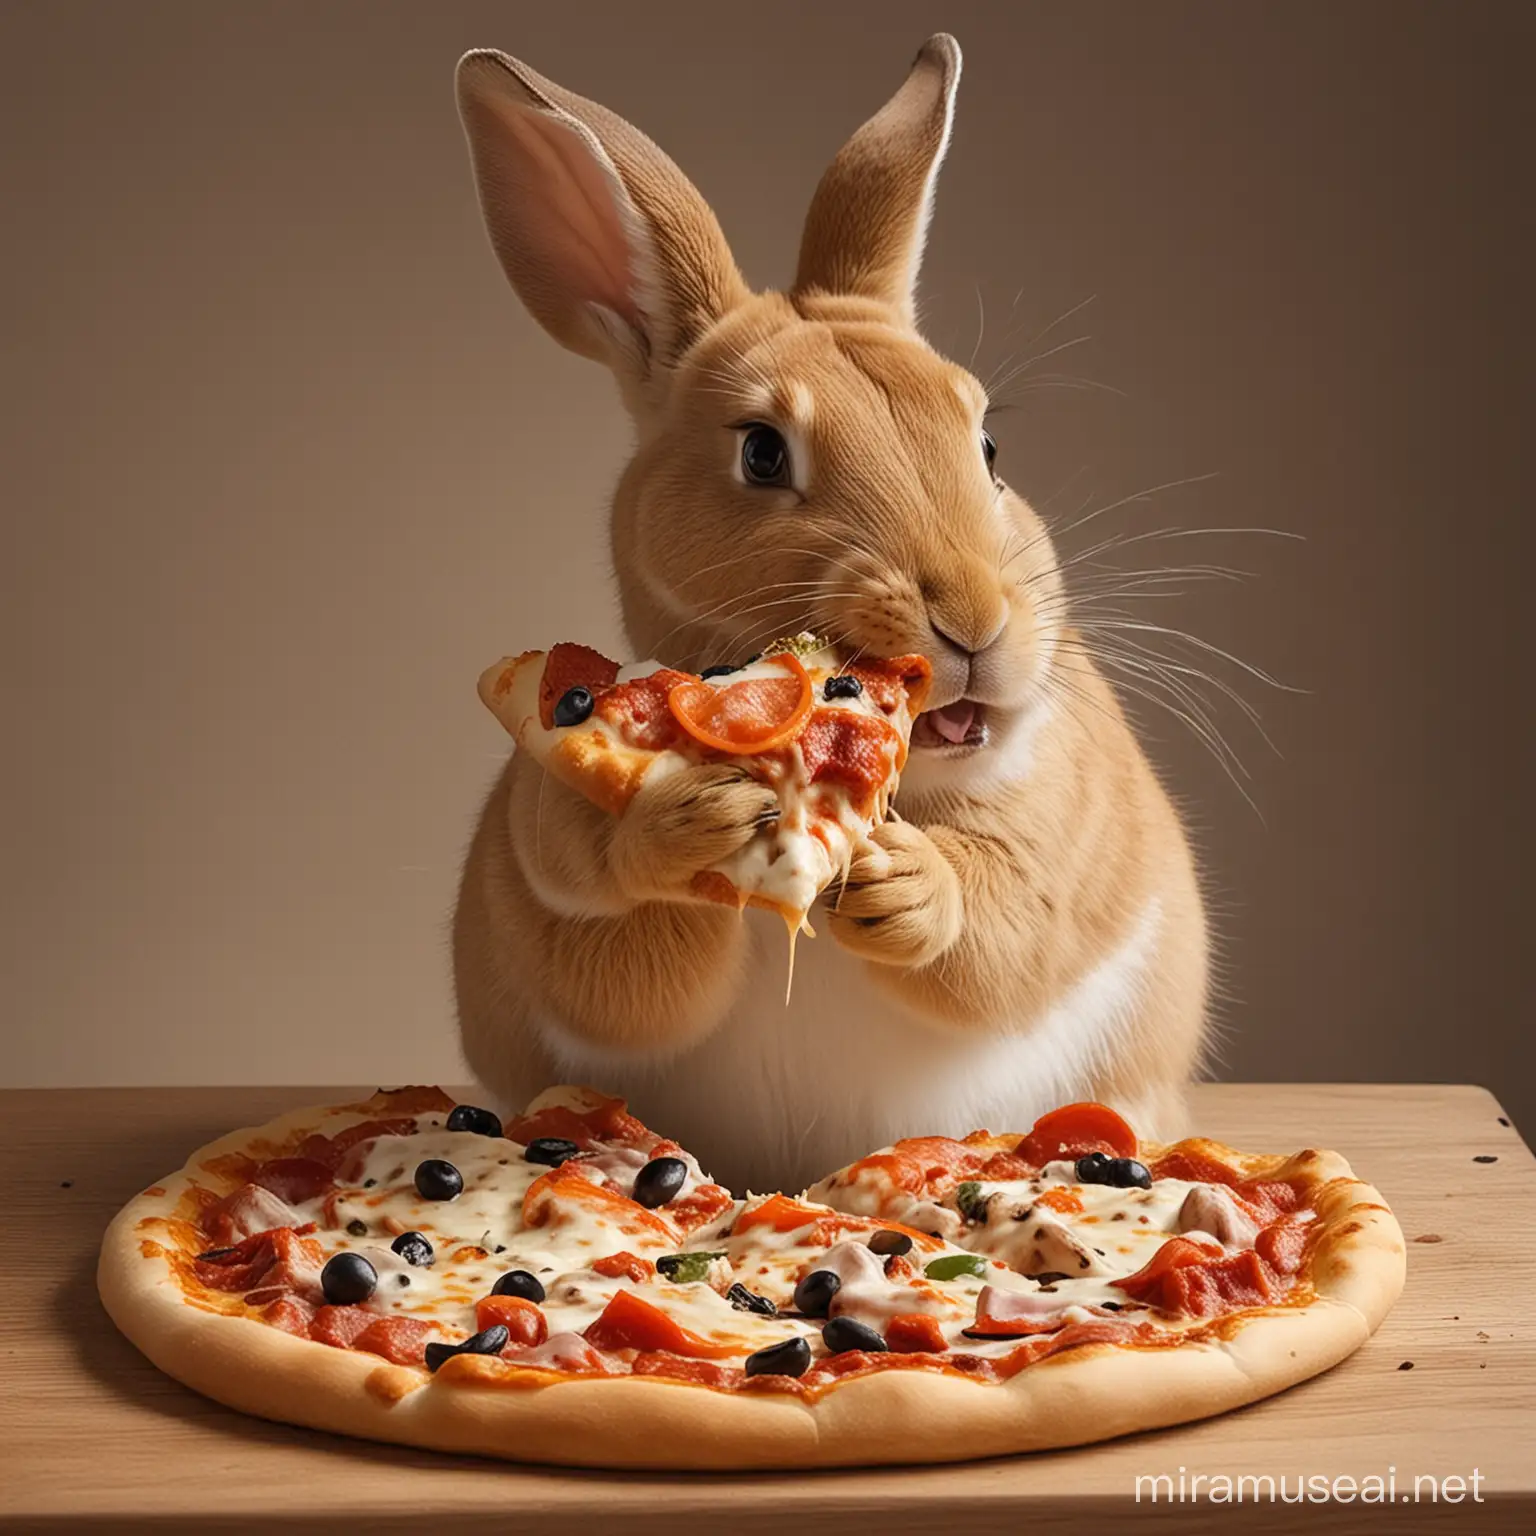 Adorable Rabbit Enjoying a Slice of Pizza